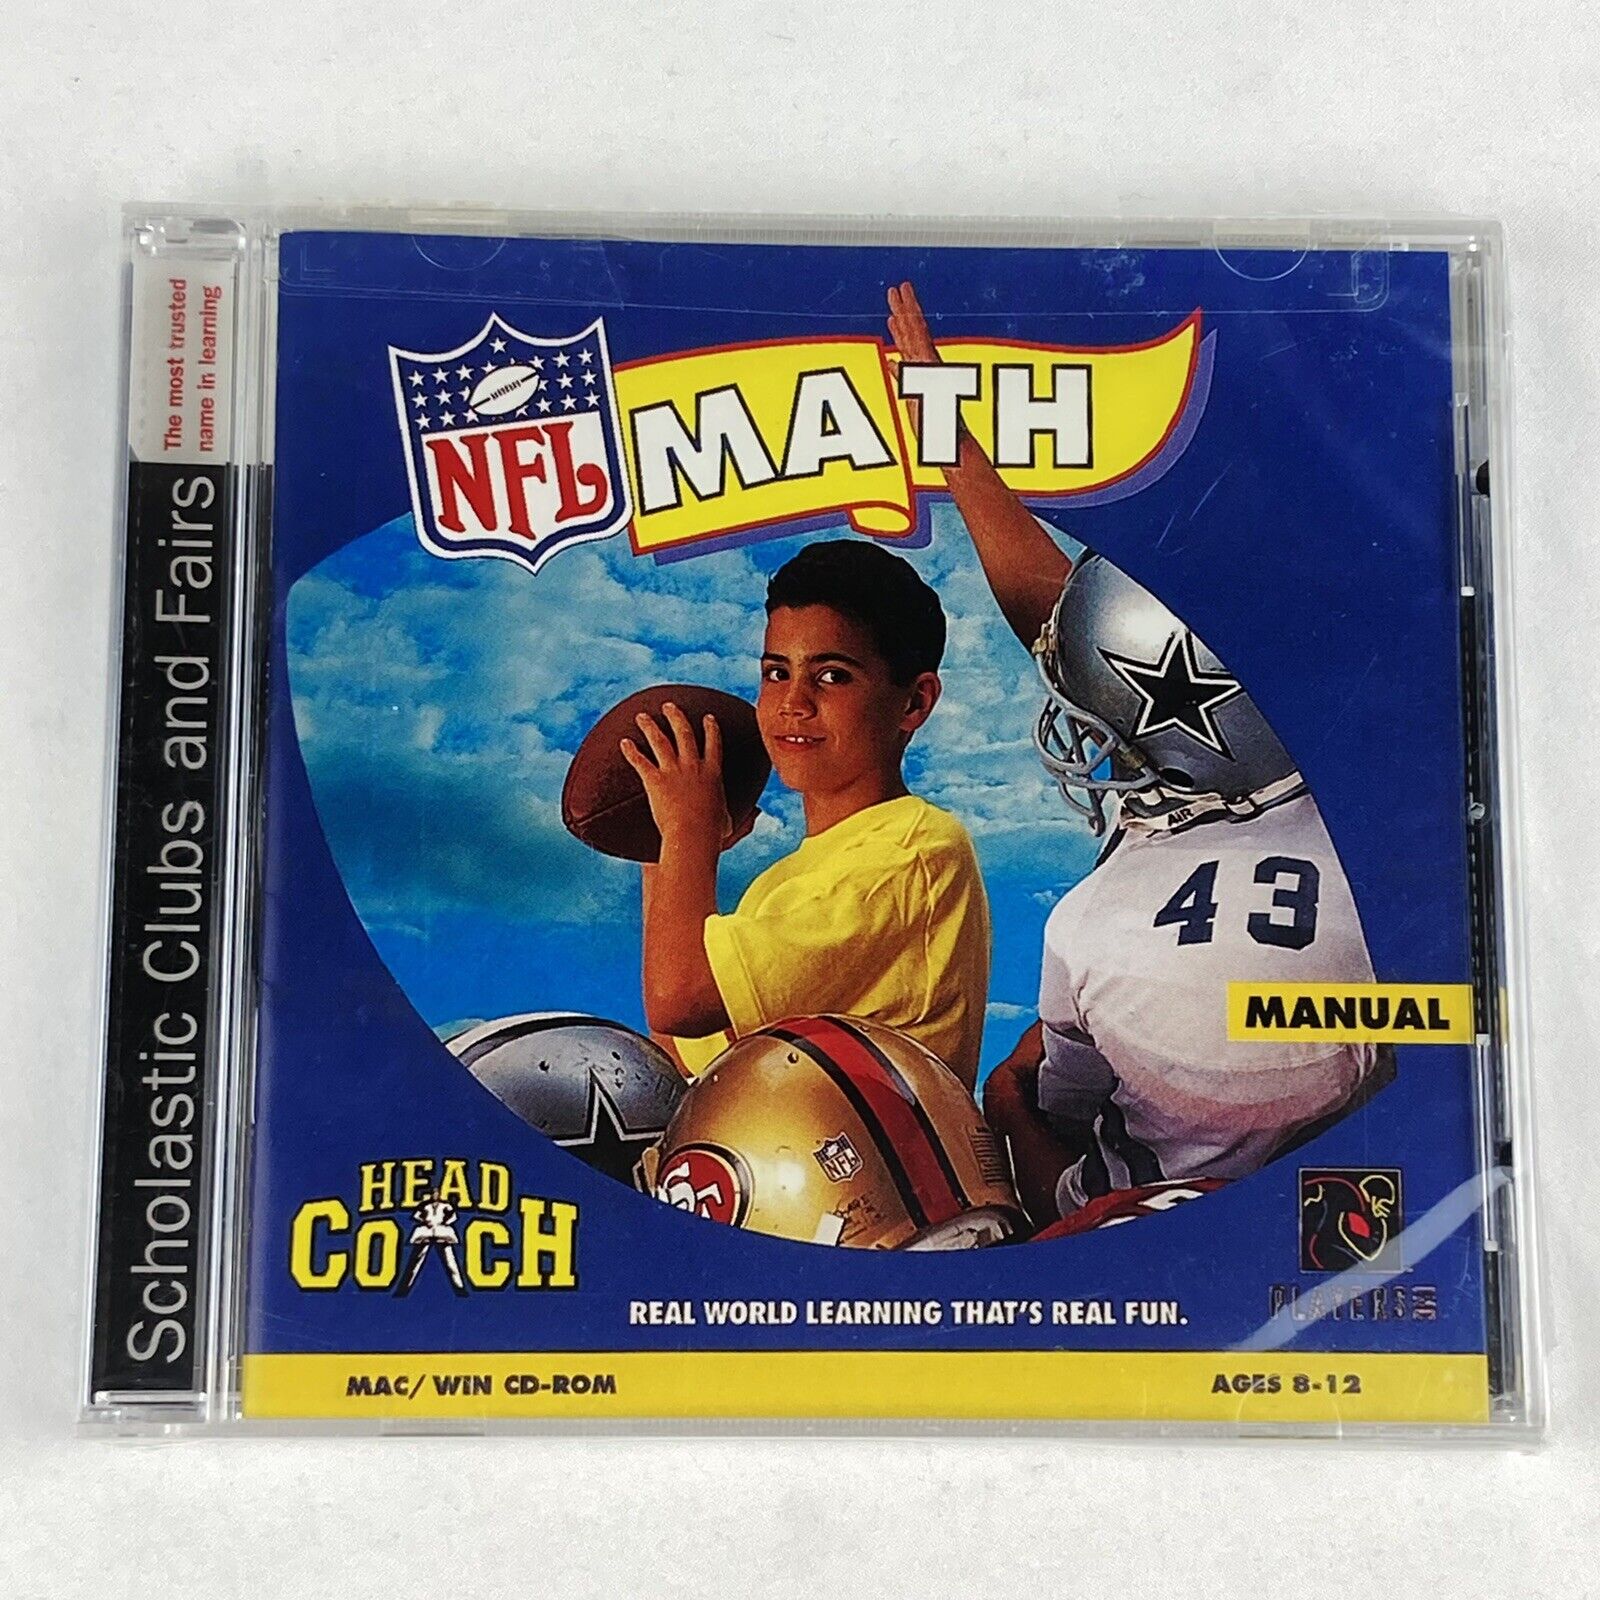 Mac Windows PC CD ROM NFL Math 1997 Brand New Sealed Ages 8-12